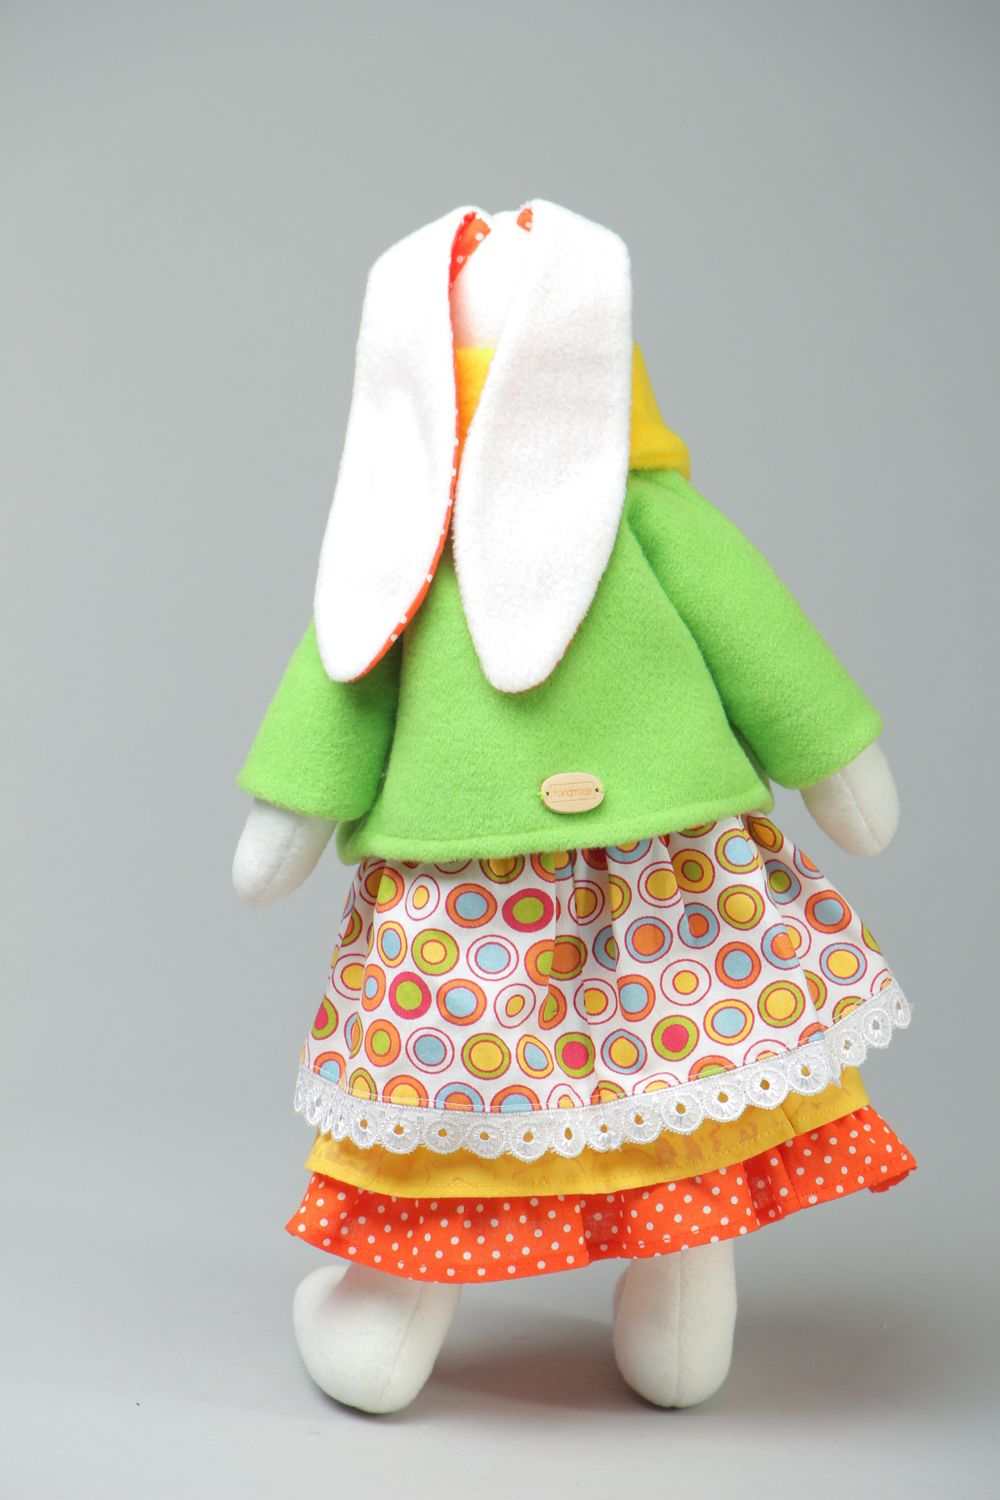 Fabric toy rabbit in dress photo 3